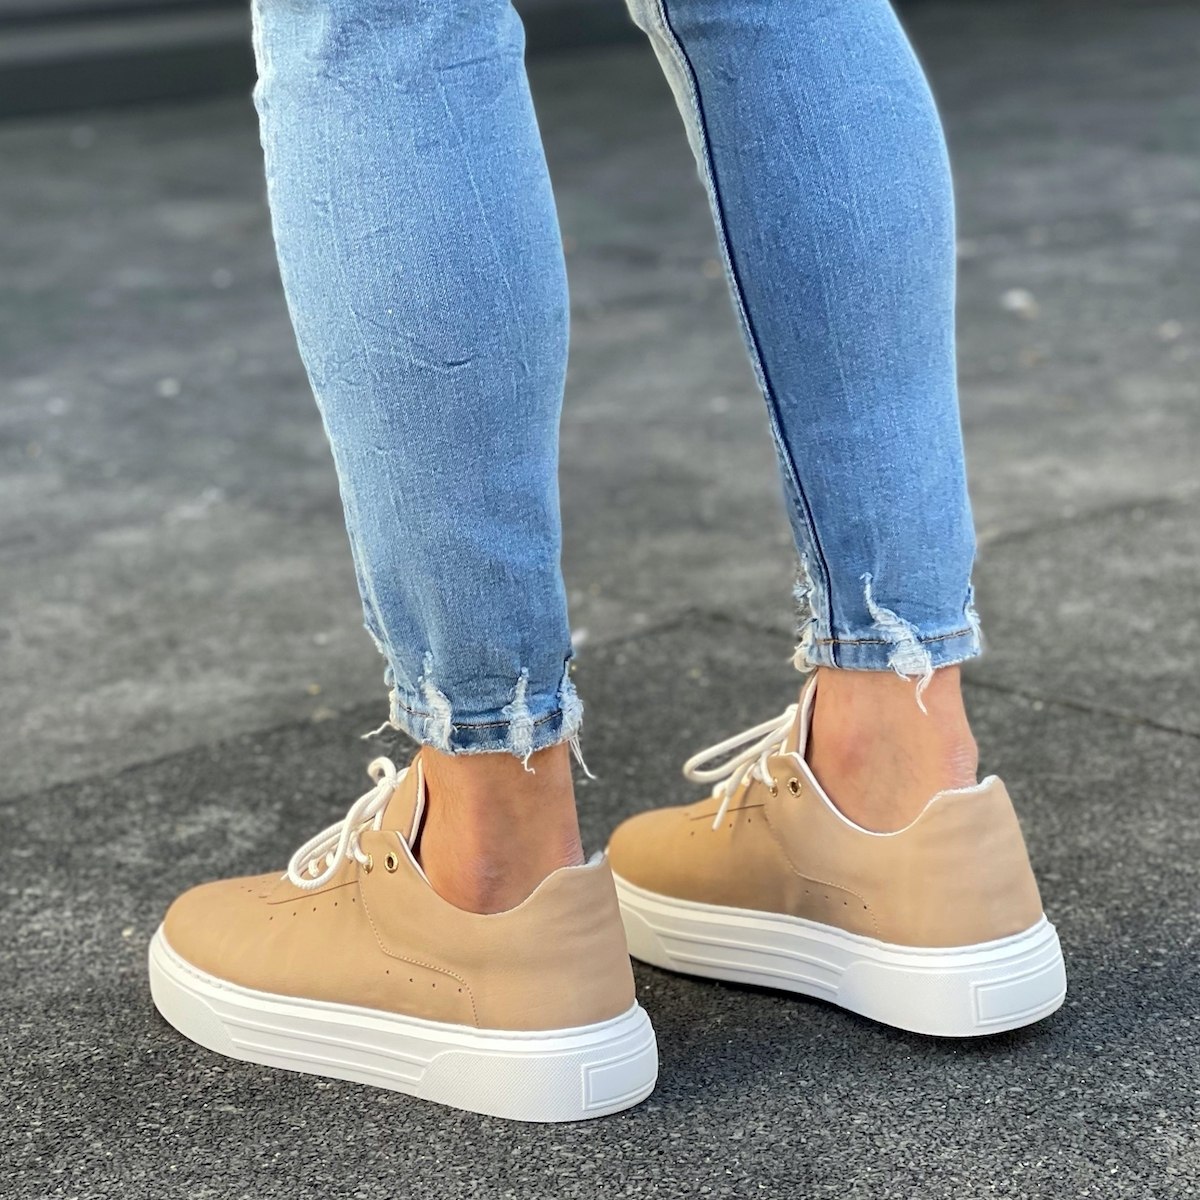 https://martinvalen.com/18690-large_default/mens-casual-sneakers-breathable-shoes-cream.jpg